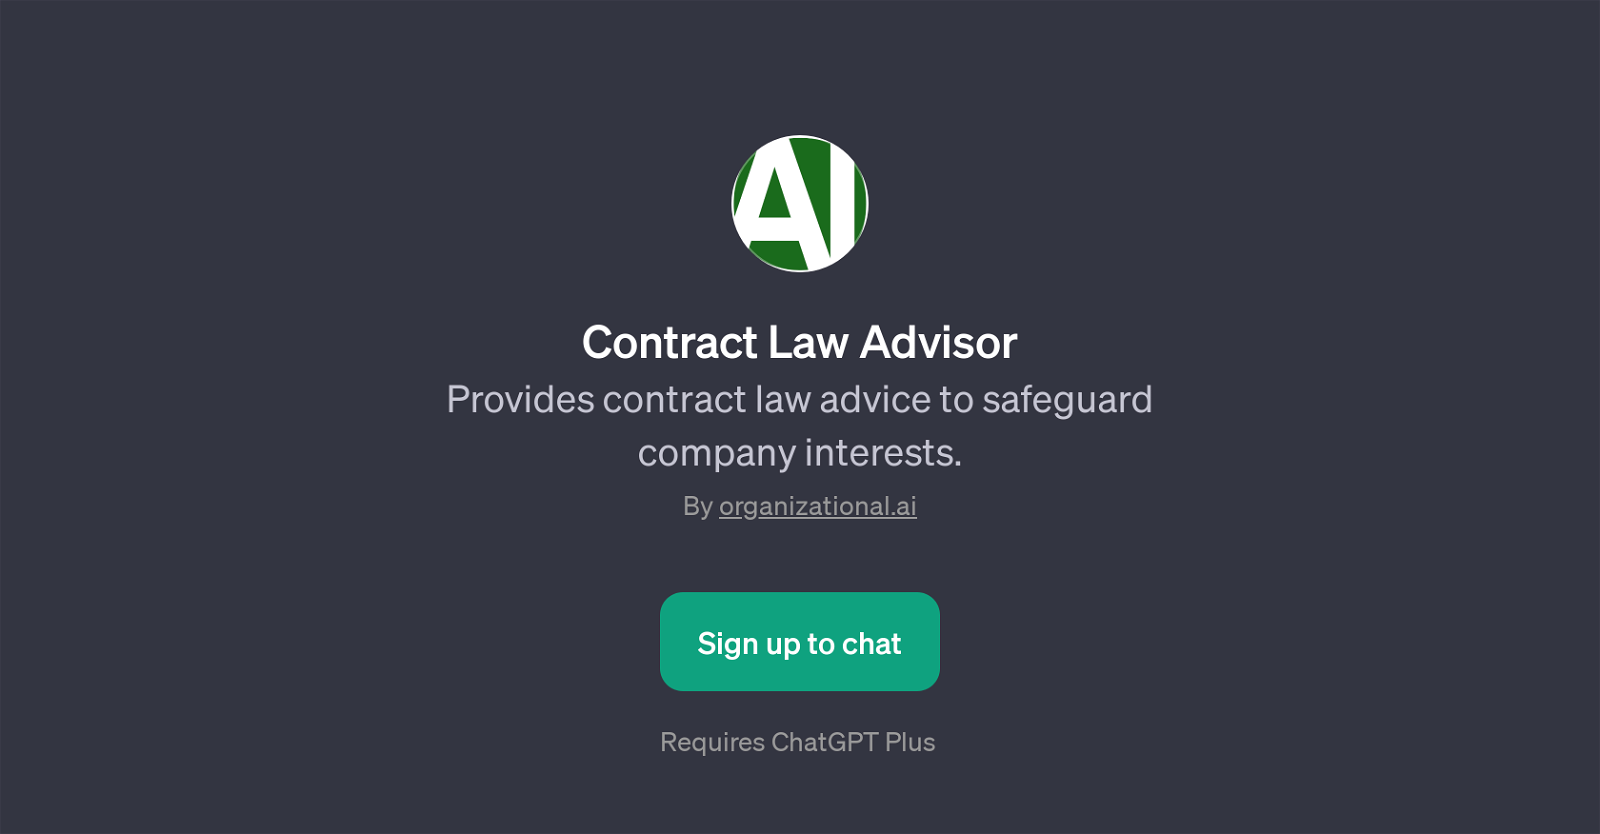 Contract Law Advisor website